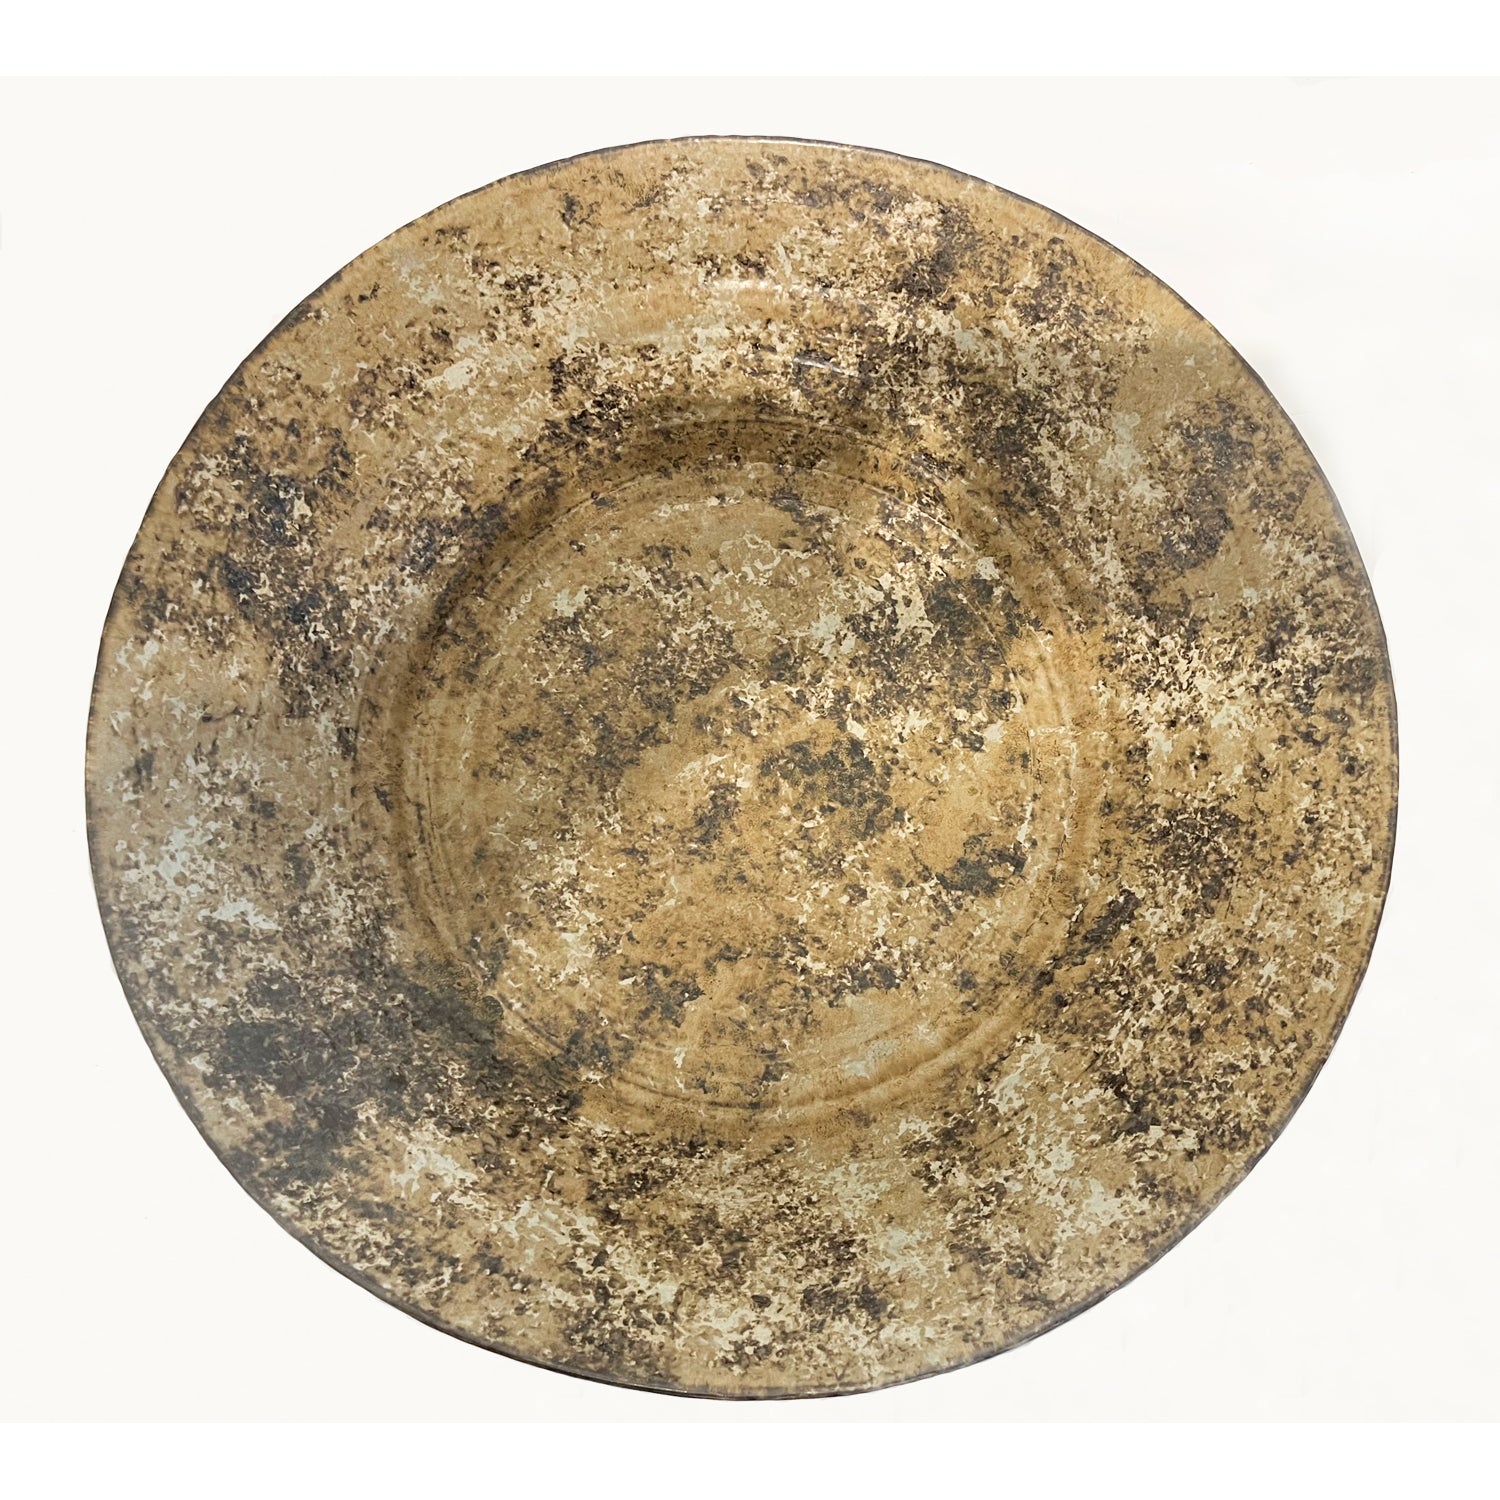 Makiko Hicher - Xlg Brown Plate, 4.5" x 18" x 18"